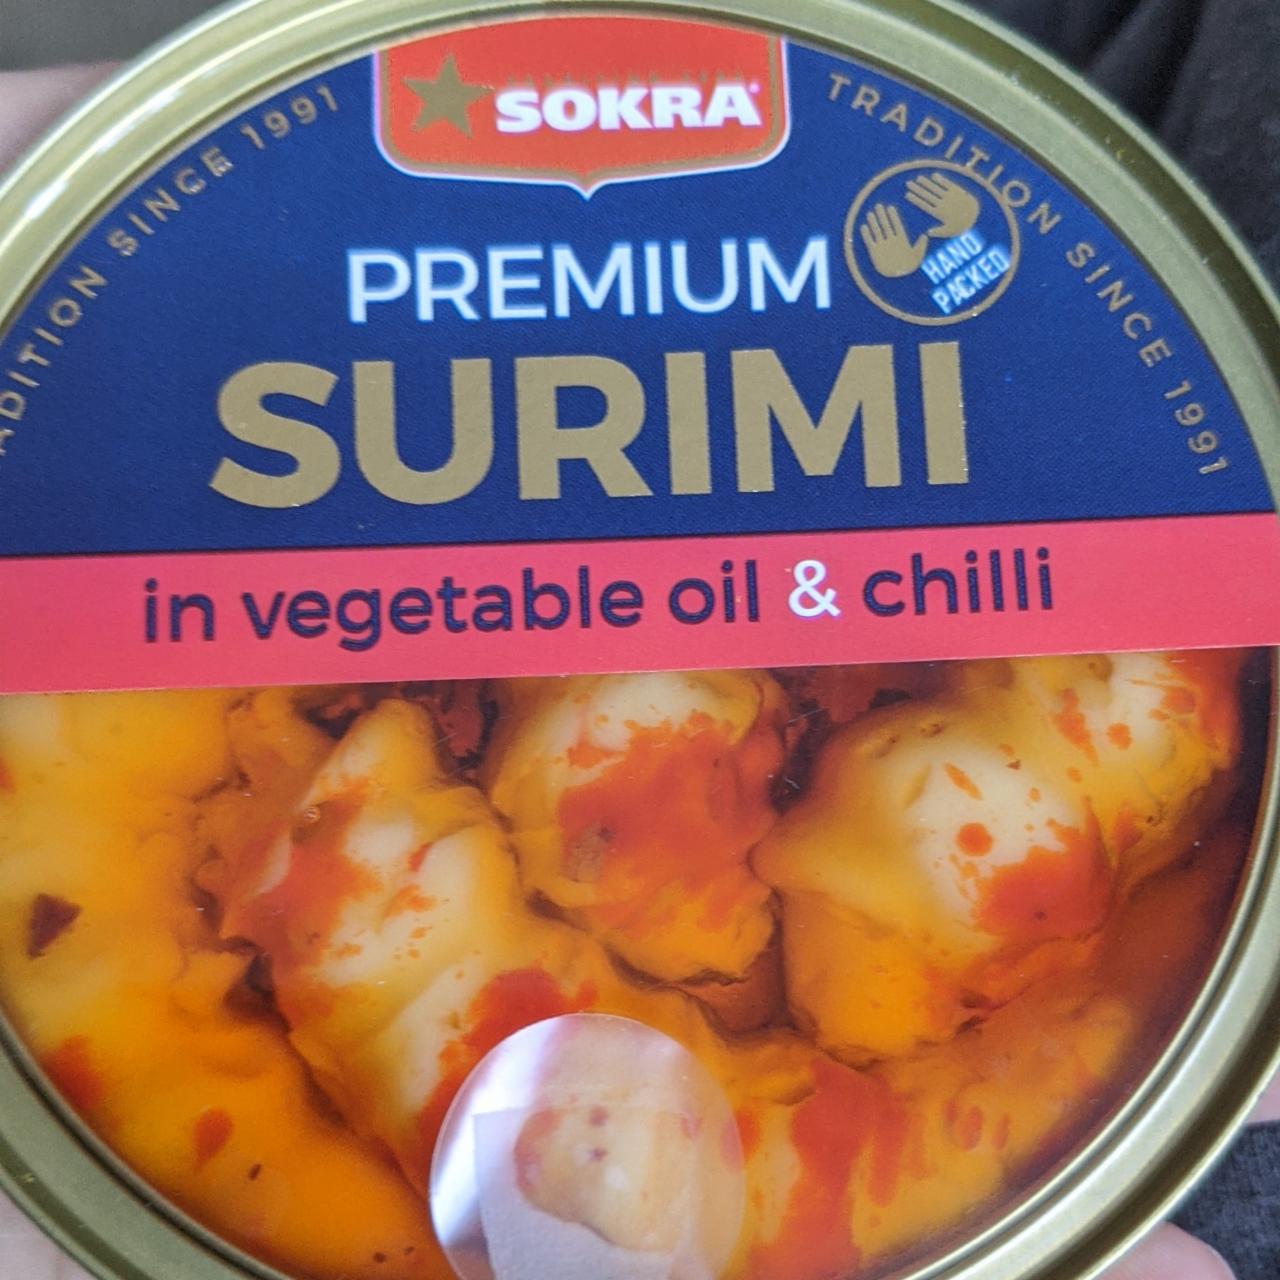 Фото - Premium Surimi in vegetable oil & chilli Sokra